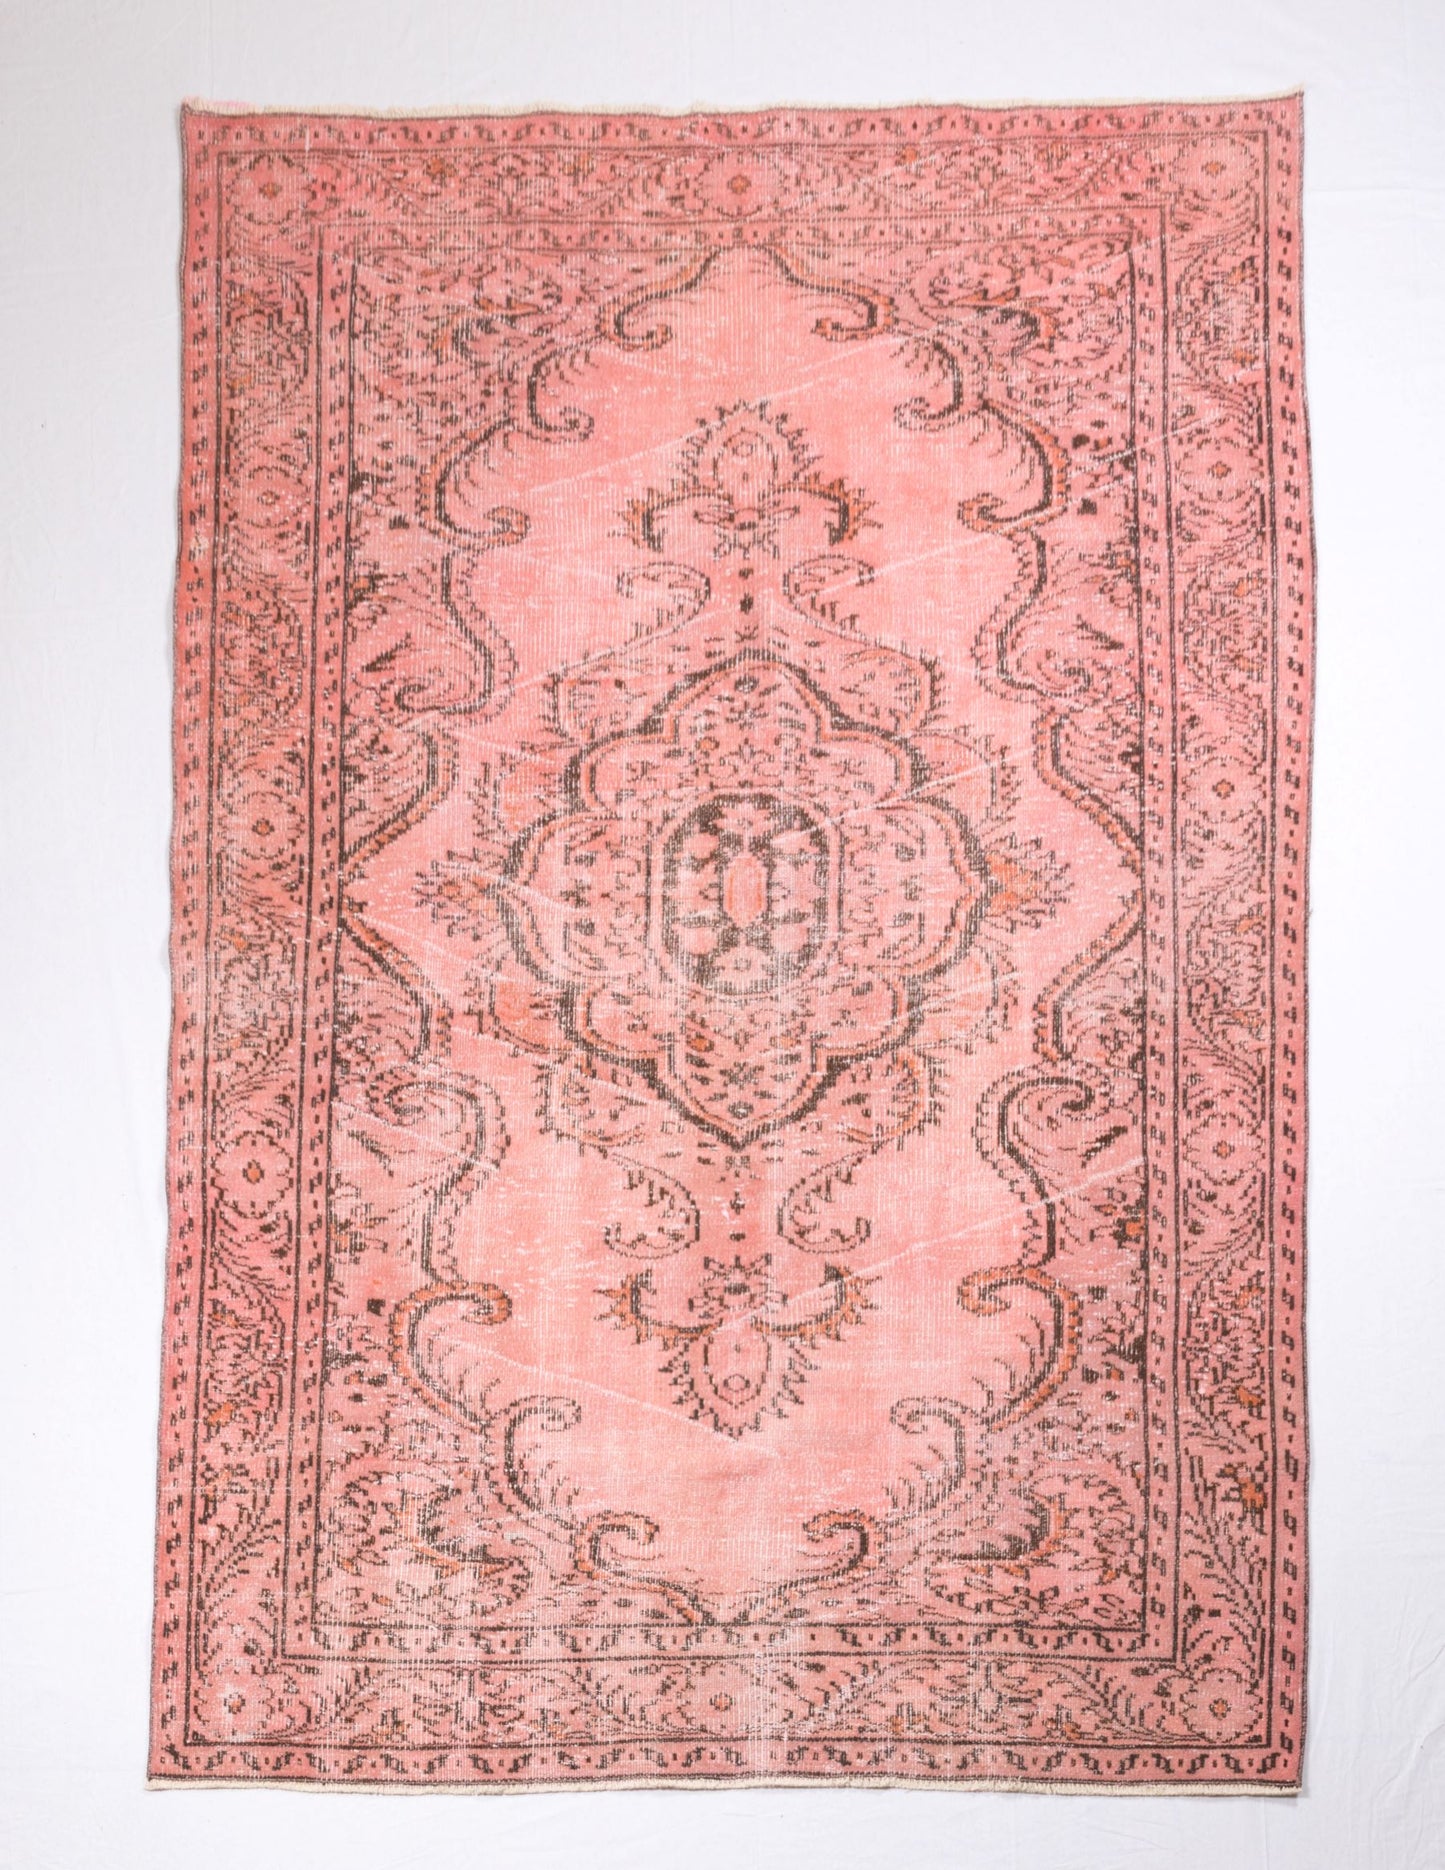 Vintage carpet, size 250x175 cm, 50+ years